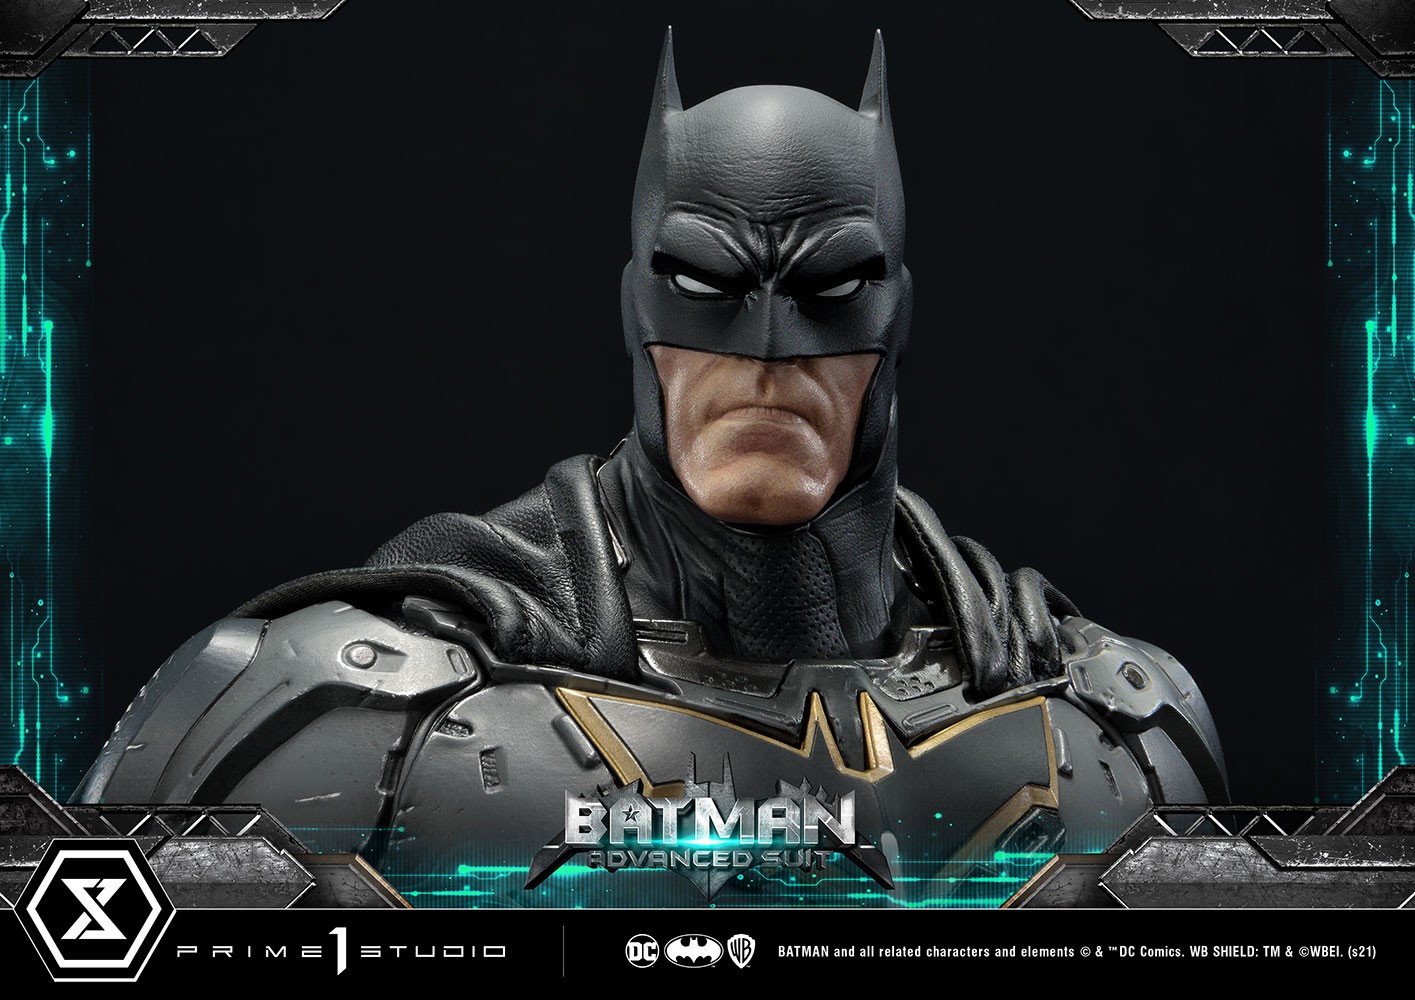 Batman Advanced Suit Collector Edition (Prototype Shown) View 22